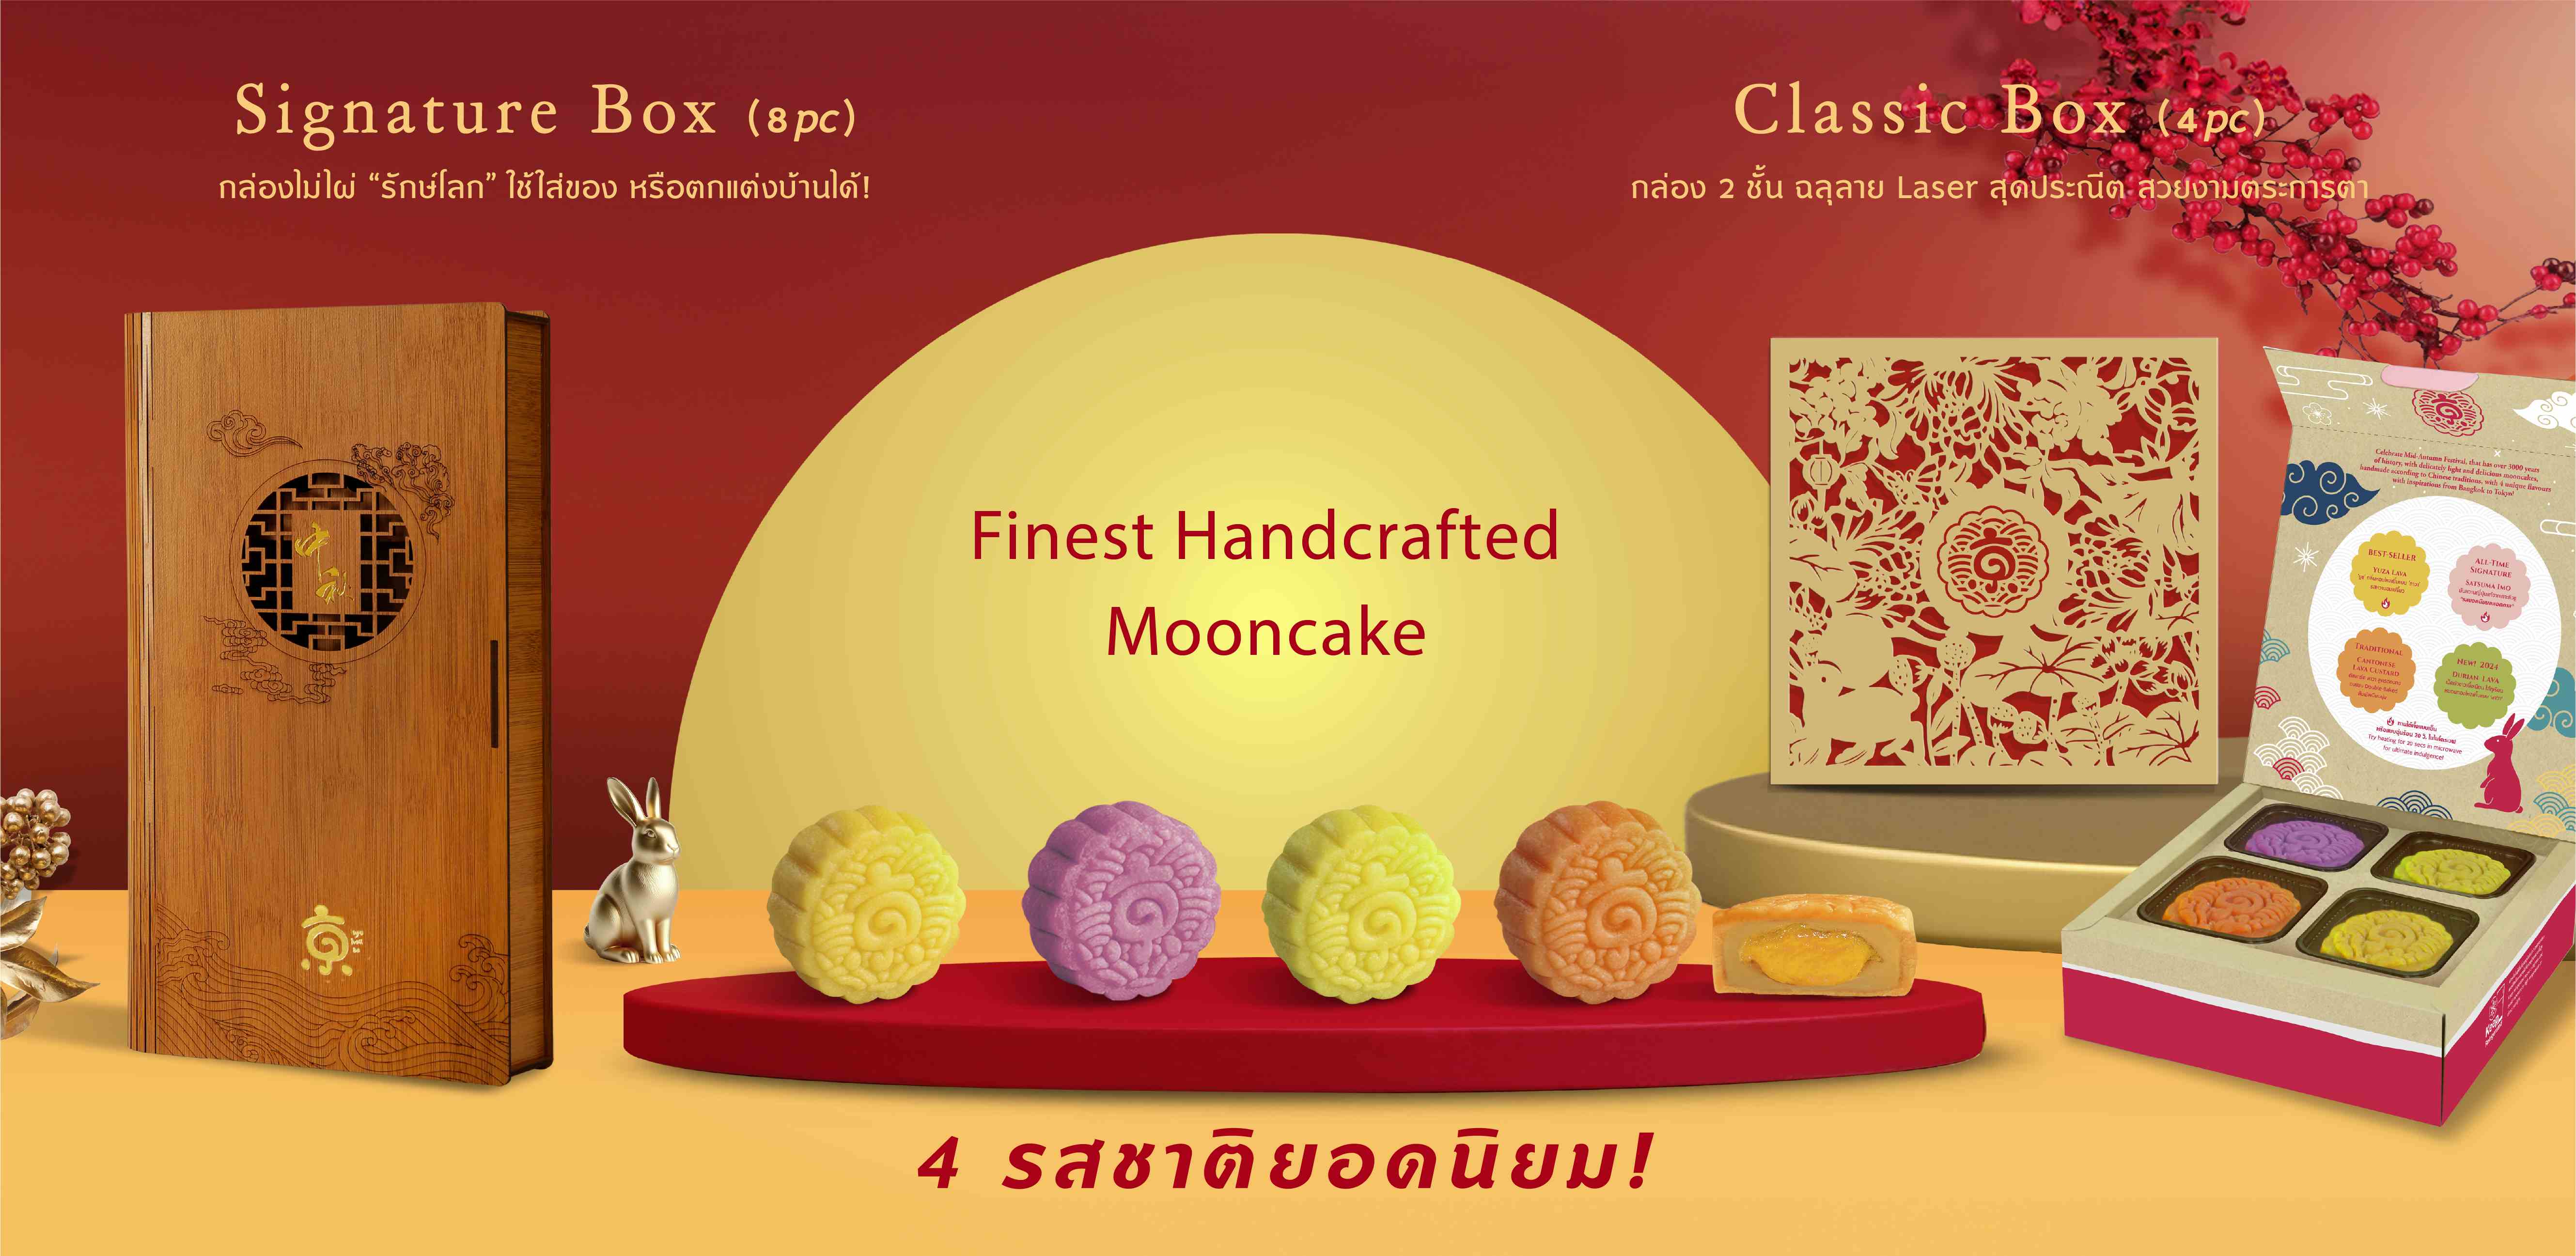 Signature Box ( 8 pc ) กล่องไม่ไผ่ “รักษ์โลก” ใช้ใส่ของ หรือตกแต่งบ้านได้! Classic Box ( 4 pc ) กล่อง 2 ชั้น ฉลุลาย Laser สุดประณีต สวยงามตระการตา  Kyo Roll En Finest Handcrafted Mooncake (ขนมไหว้พระจันทร์ 4 รสชาติยอดนิยม)